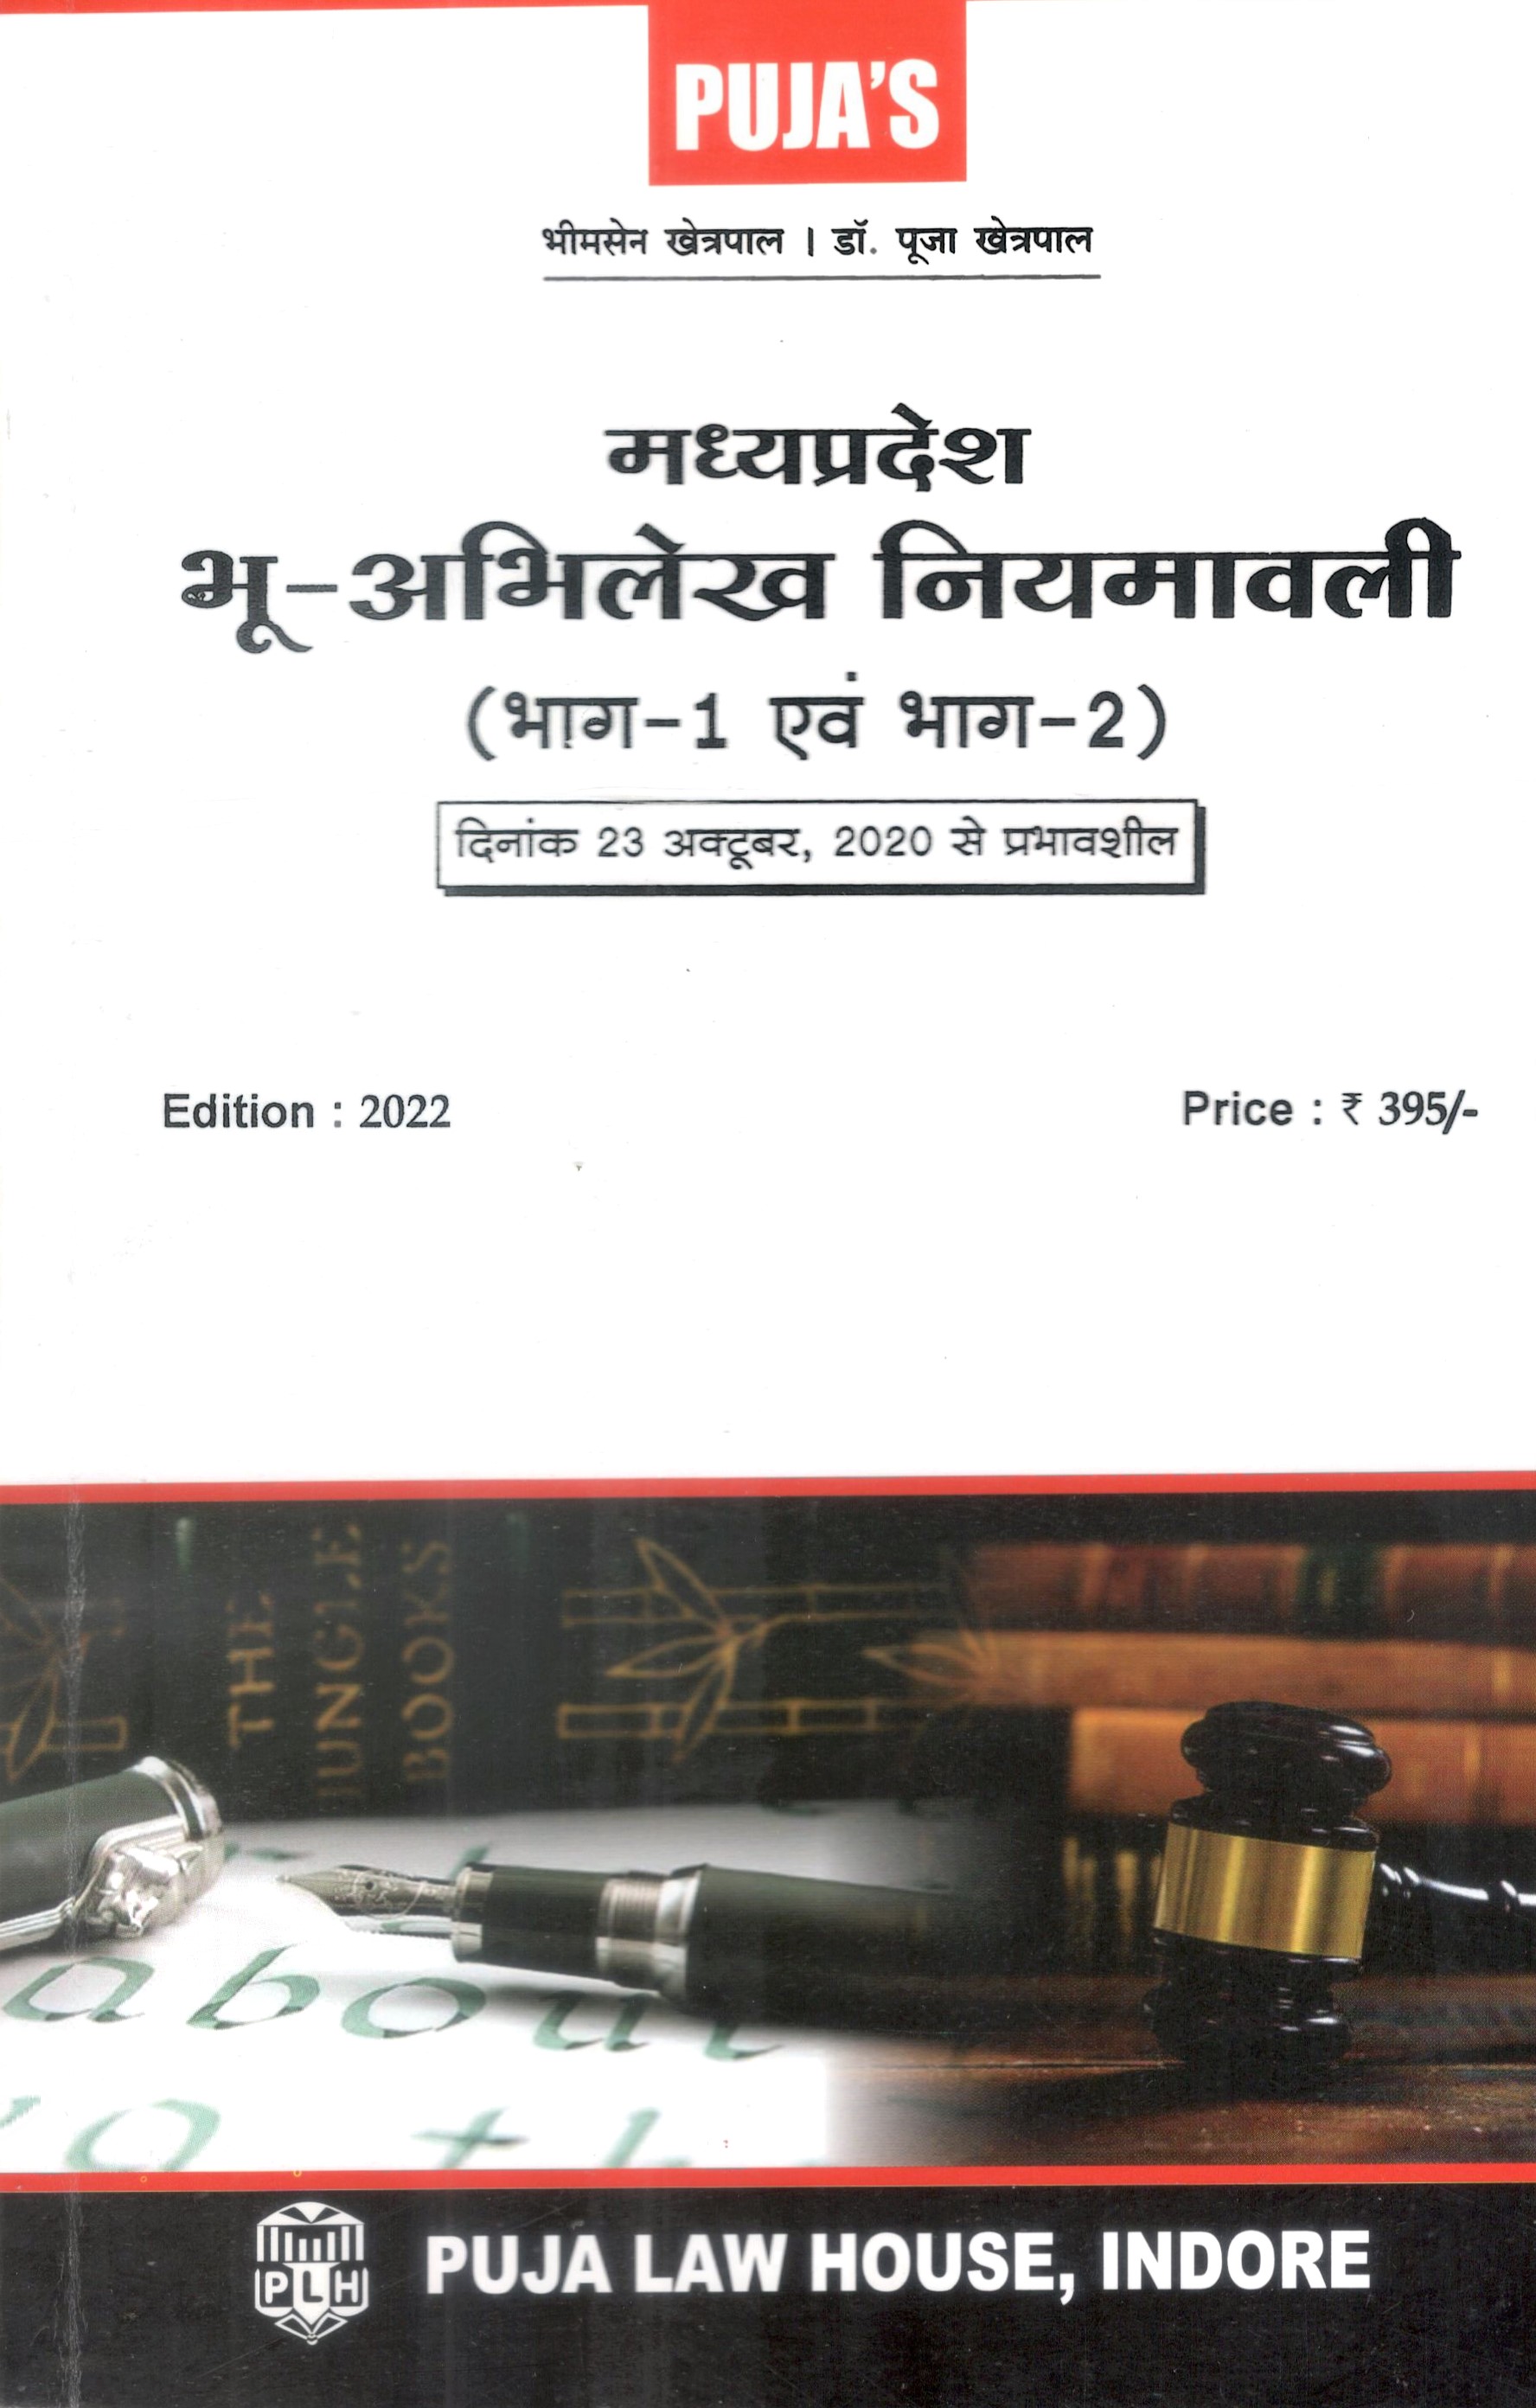  Buy मध्य प्रदेश भू अभिलेख नियमावली (भाग-1 एवं भाग-2) / Madhya Pradesh Land Records Manual (Part-1 and Part-2)